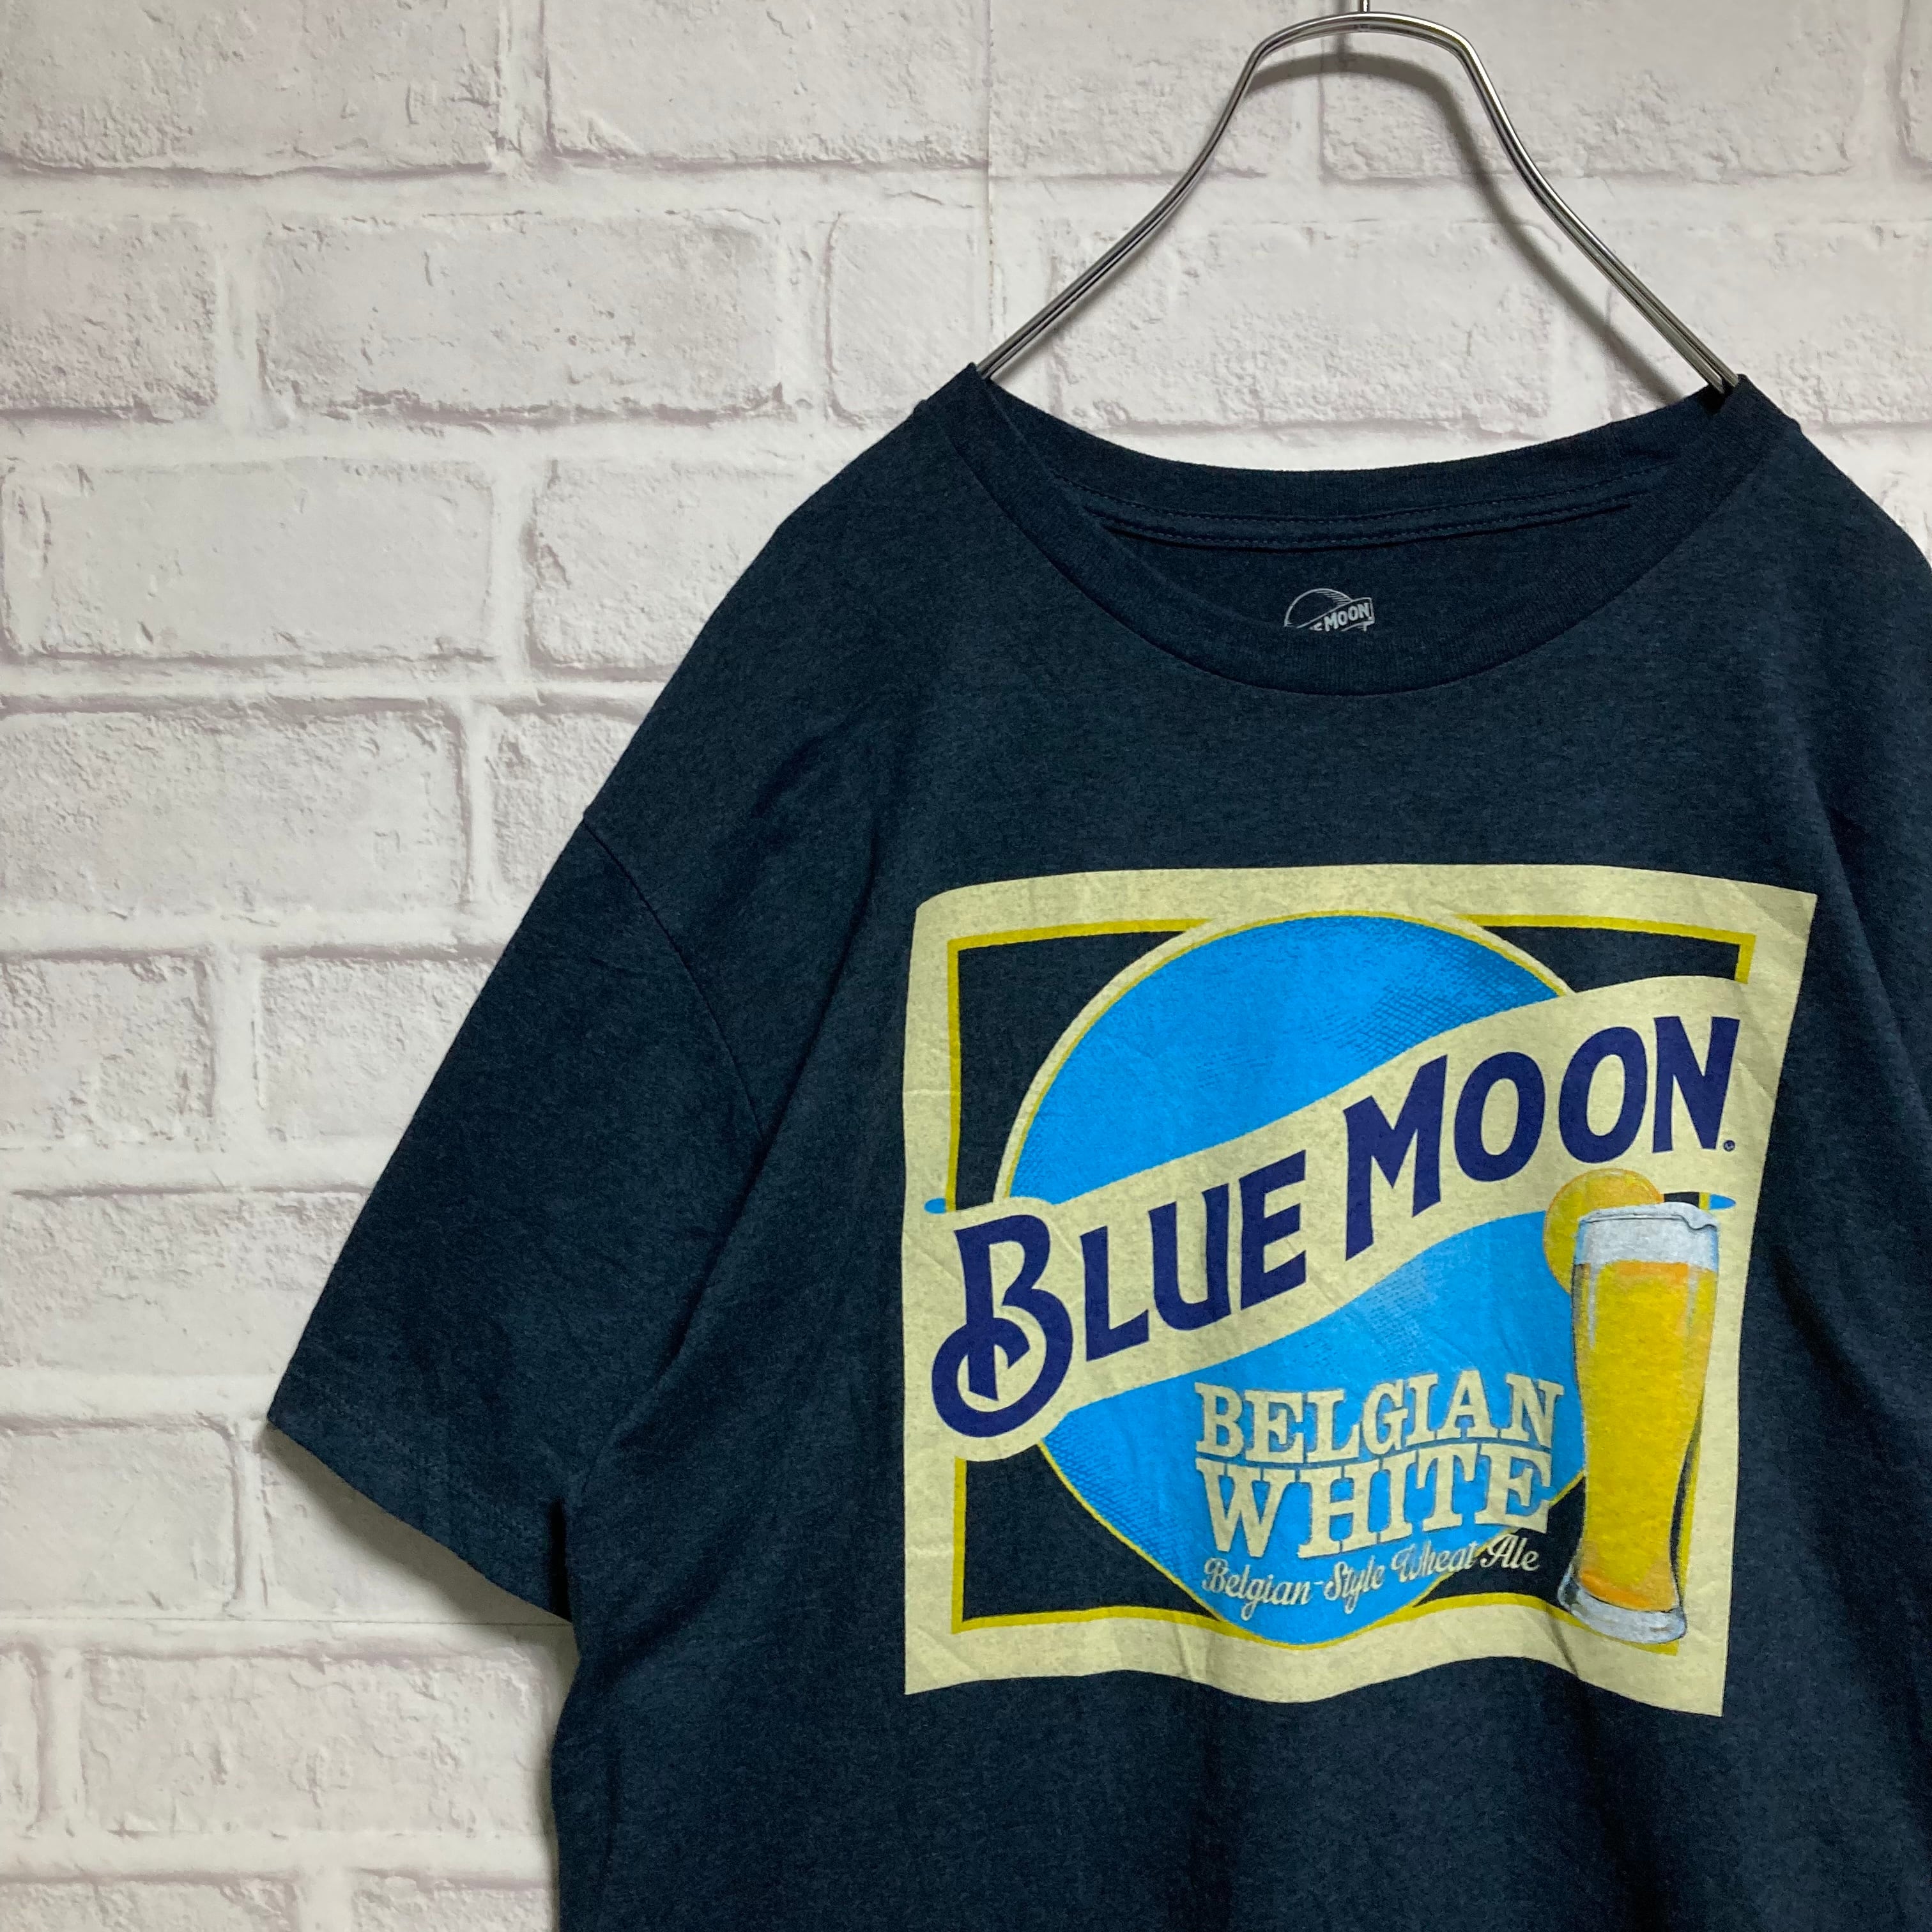 BLUE MOONブルームーンビールビアTシャツアドバタイジングヘザーネイビー